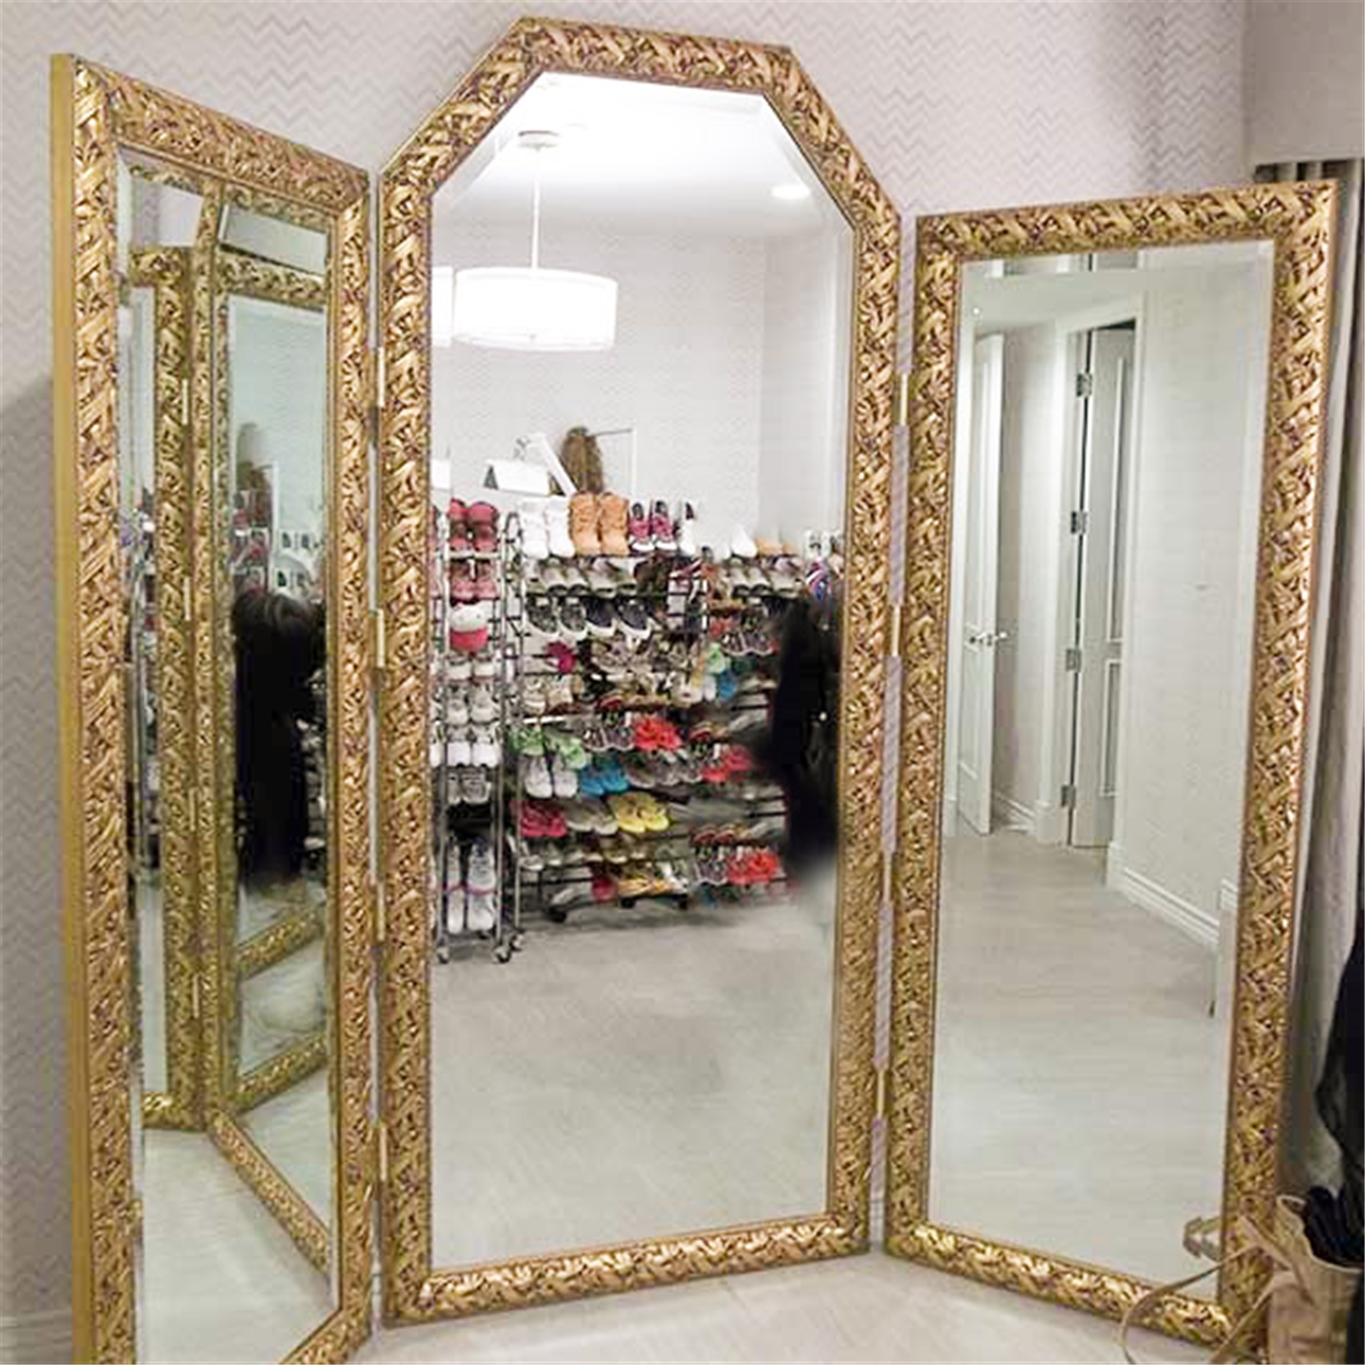 WM1624 - Very Ornate - Gold, Silver & Red - Custom 3 Panel Mirror